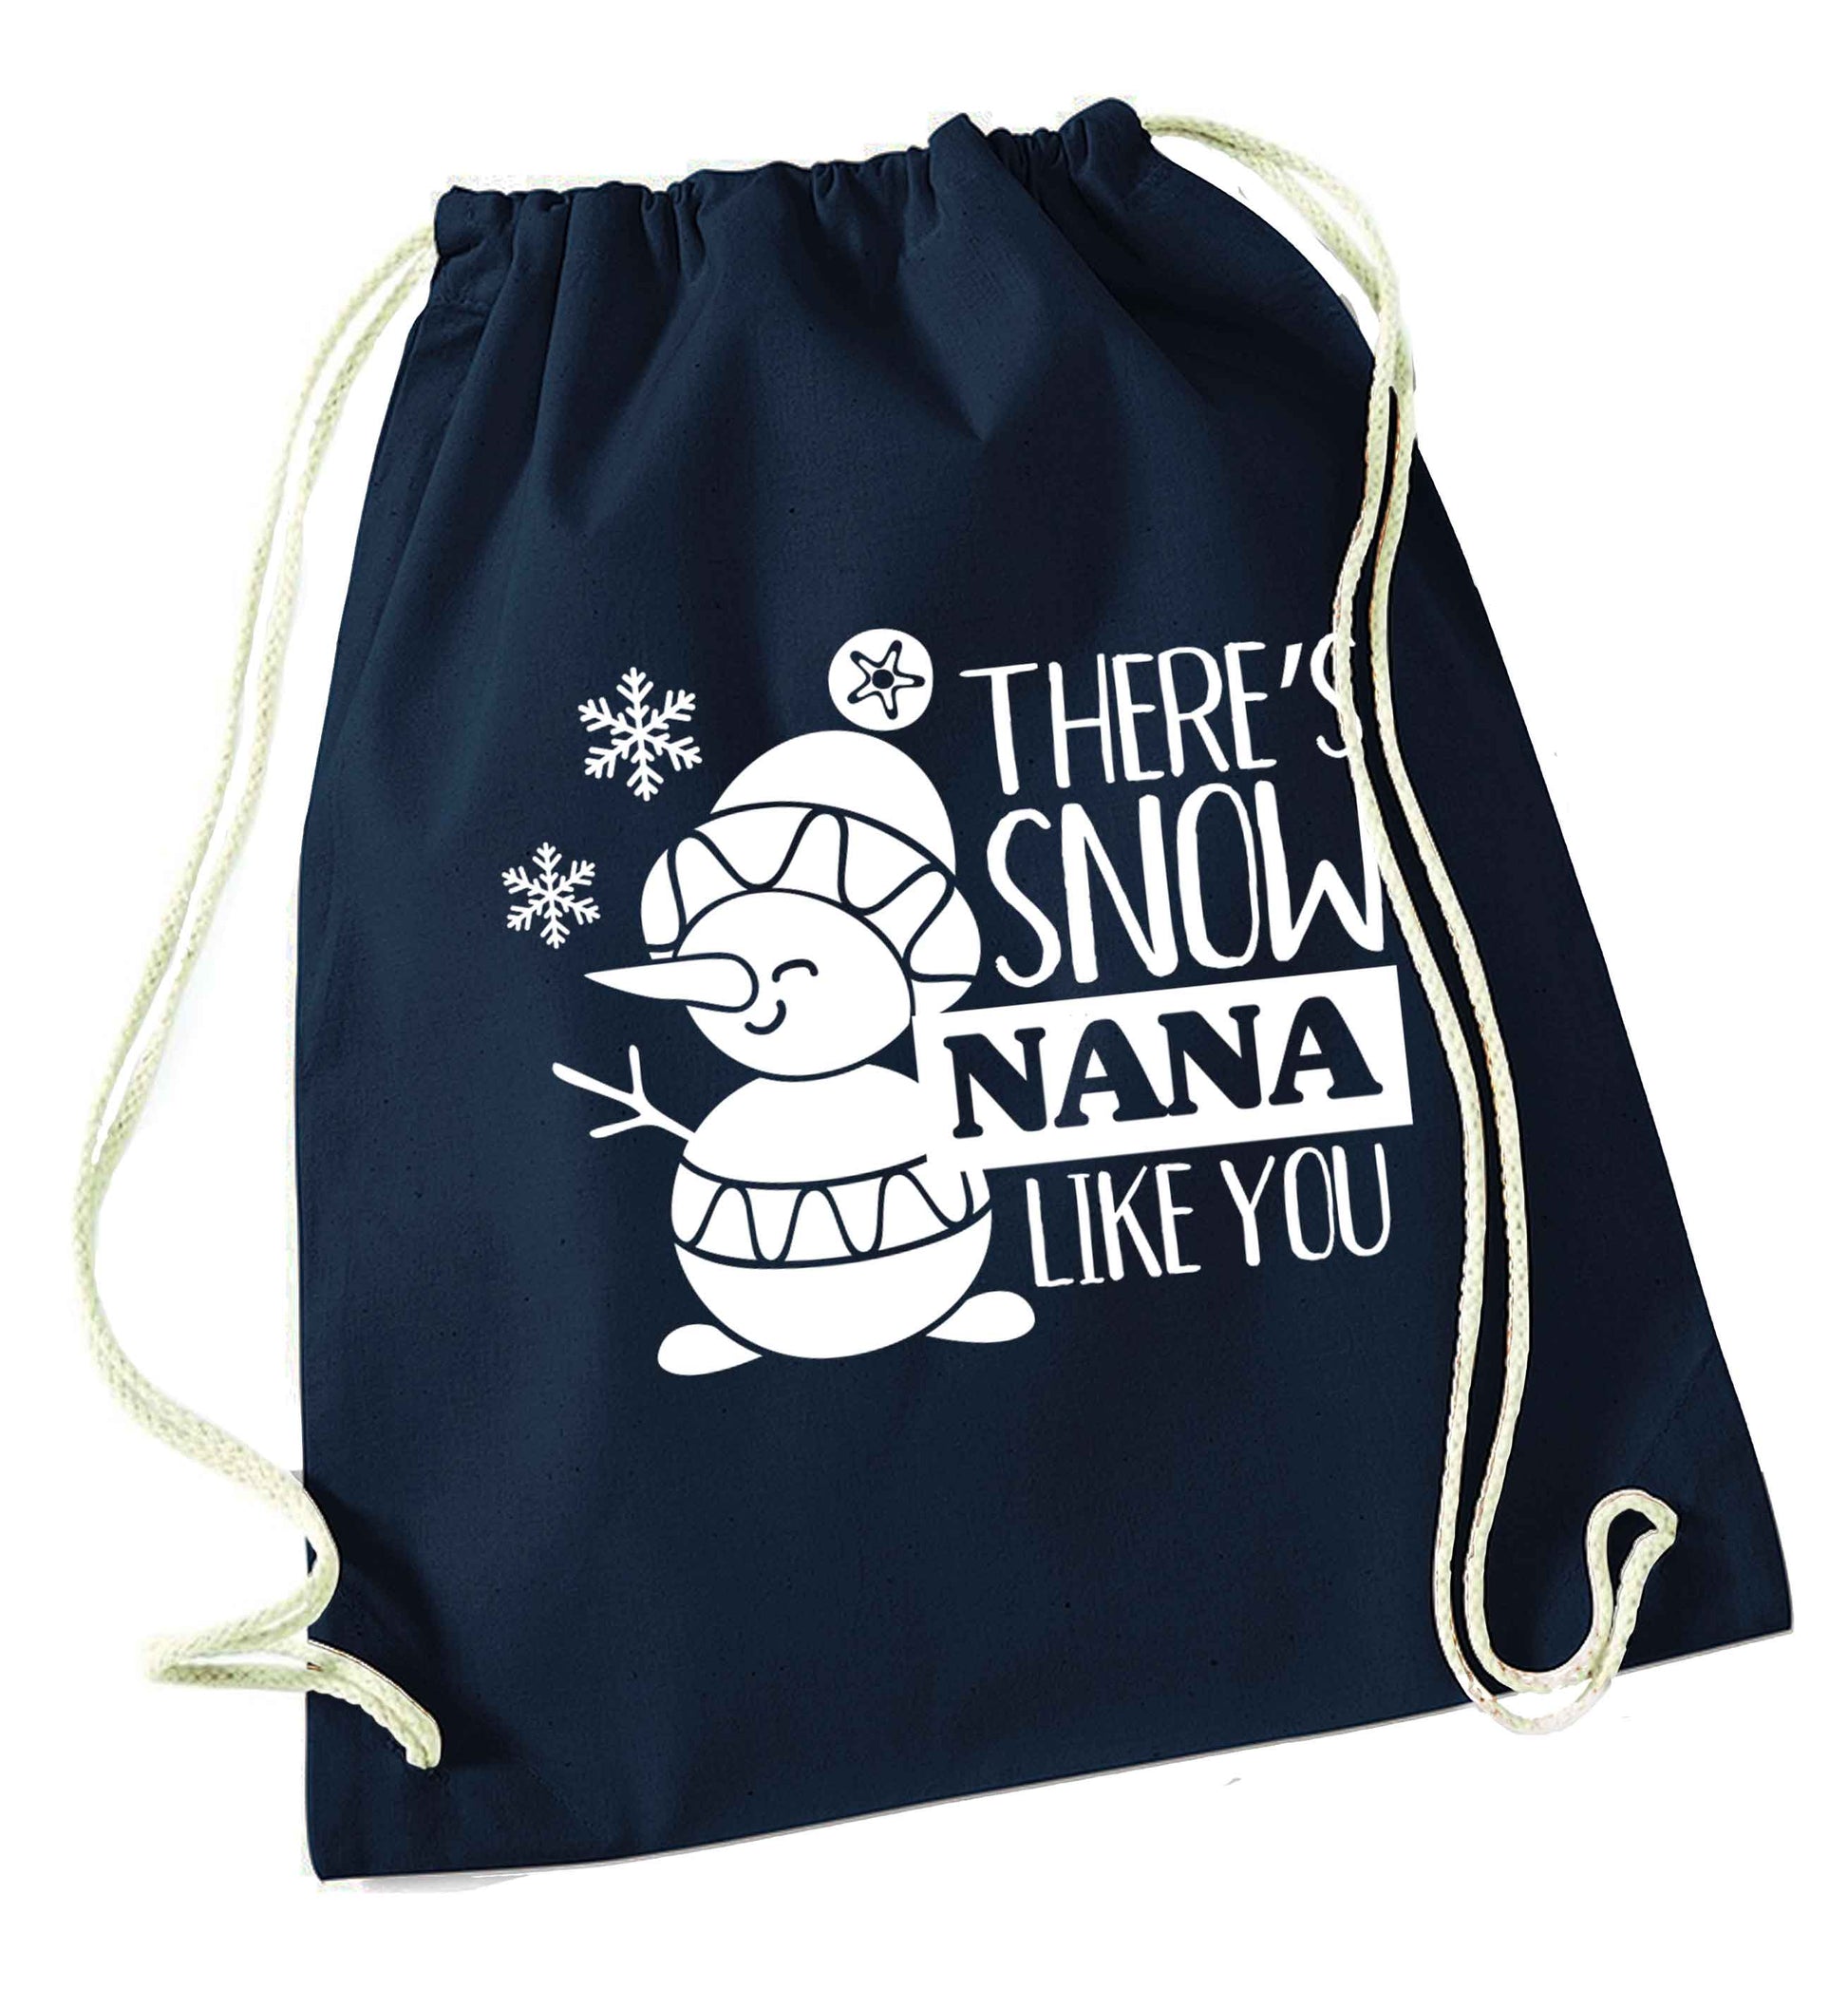 There's snow nana like you navy drawstring bag